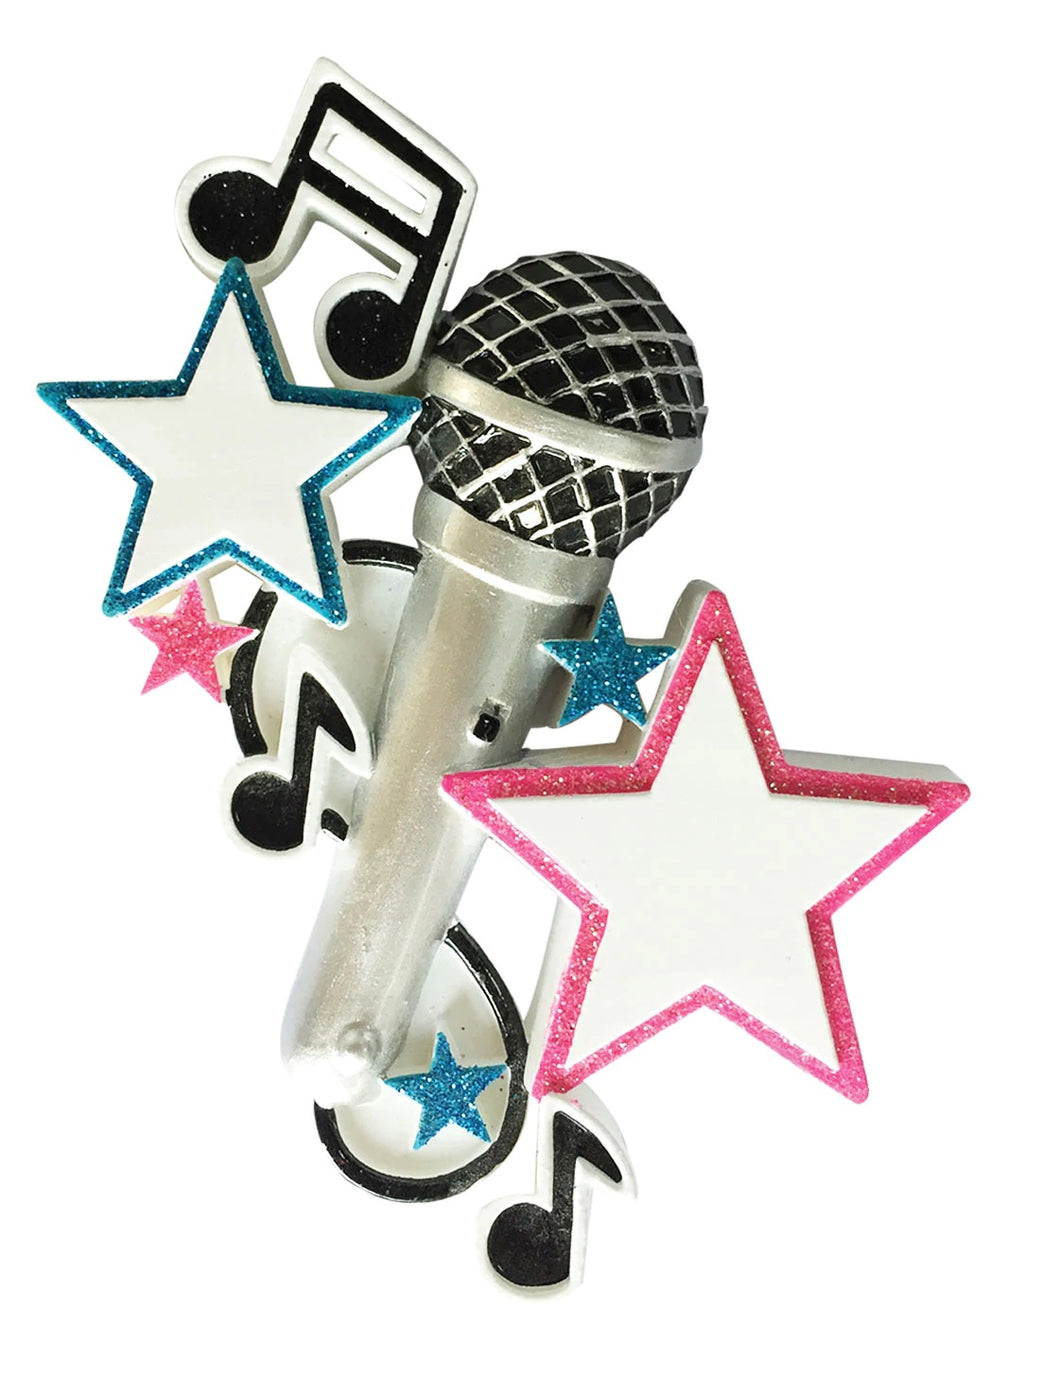 Microphone/Karaoke/Singer Personalize Christmas Ornament